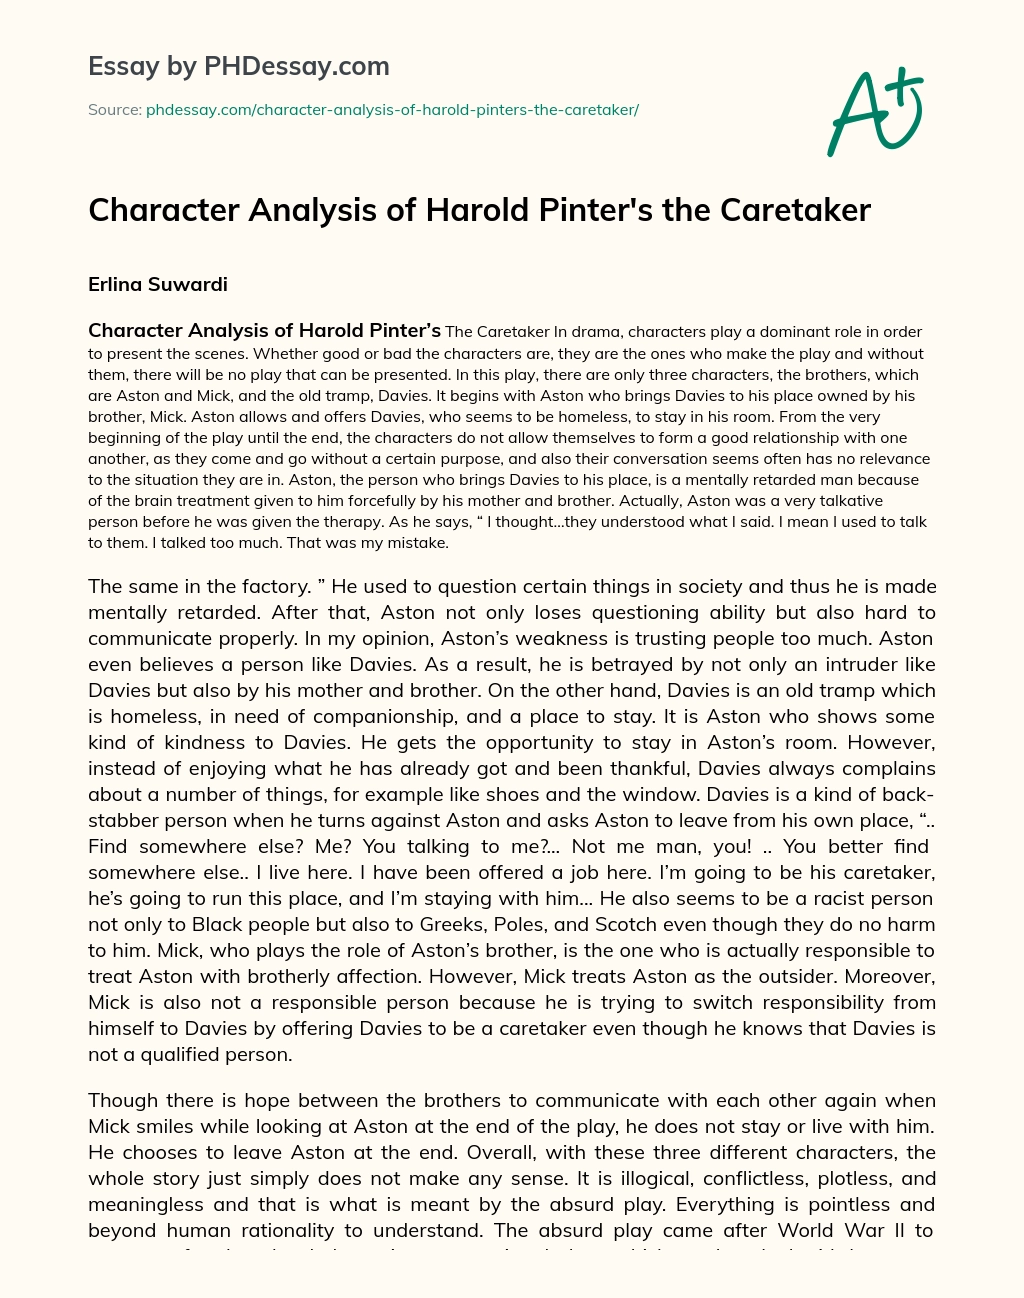 Character Analysis of Harold Pinter’s the Caretaker essay